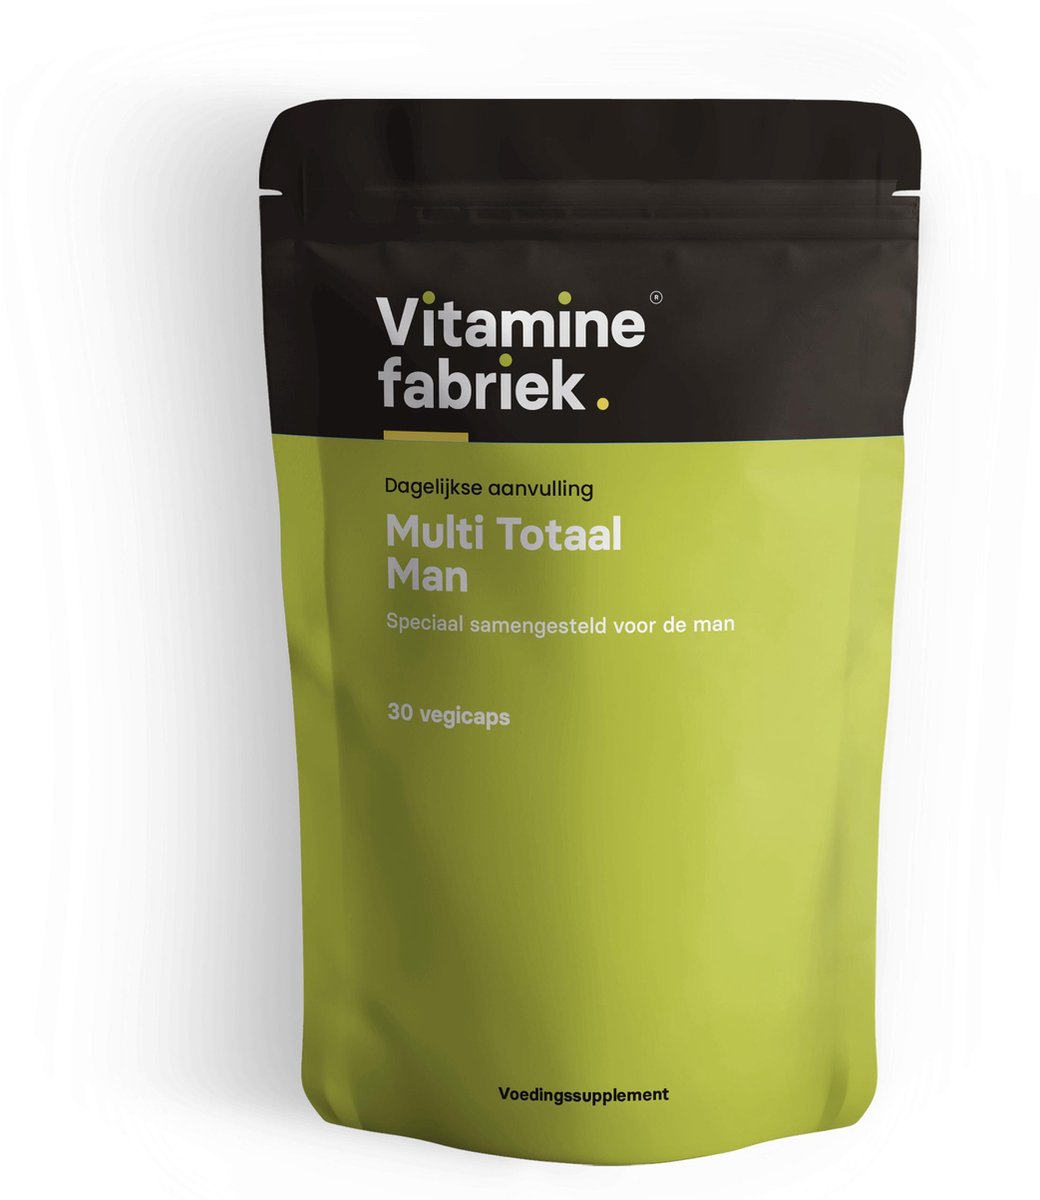 Vitaminefabriek - Multi Totaal Man - 30 vegicaps - Vitaminen - vegan - voedingssupplement